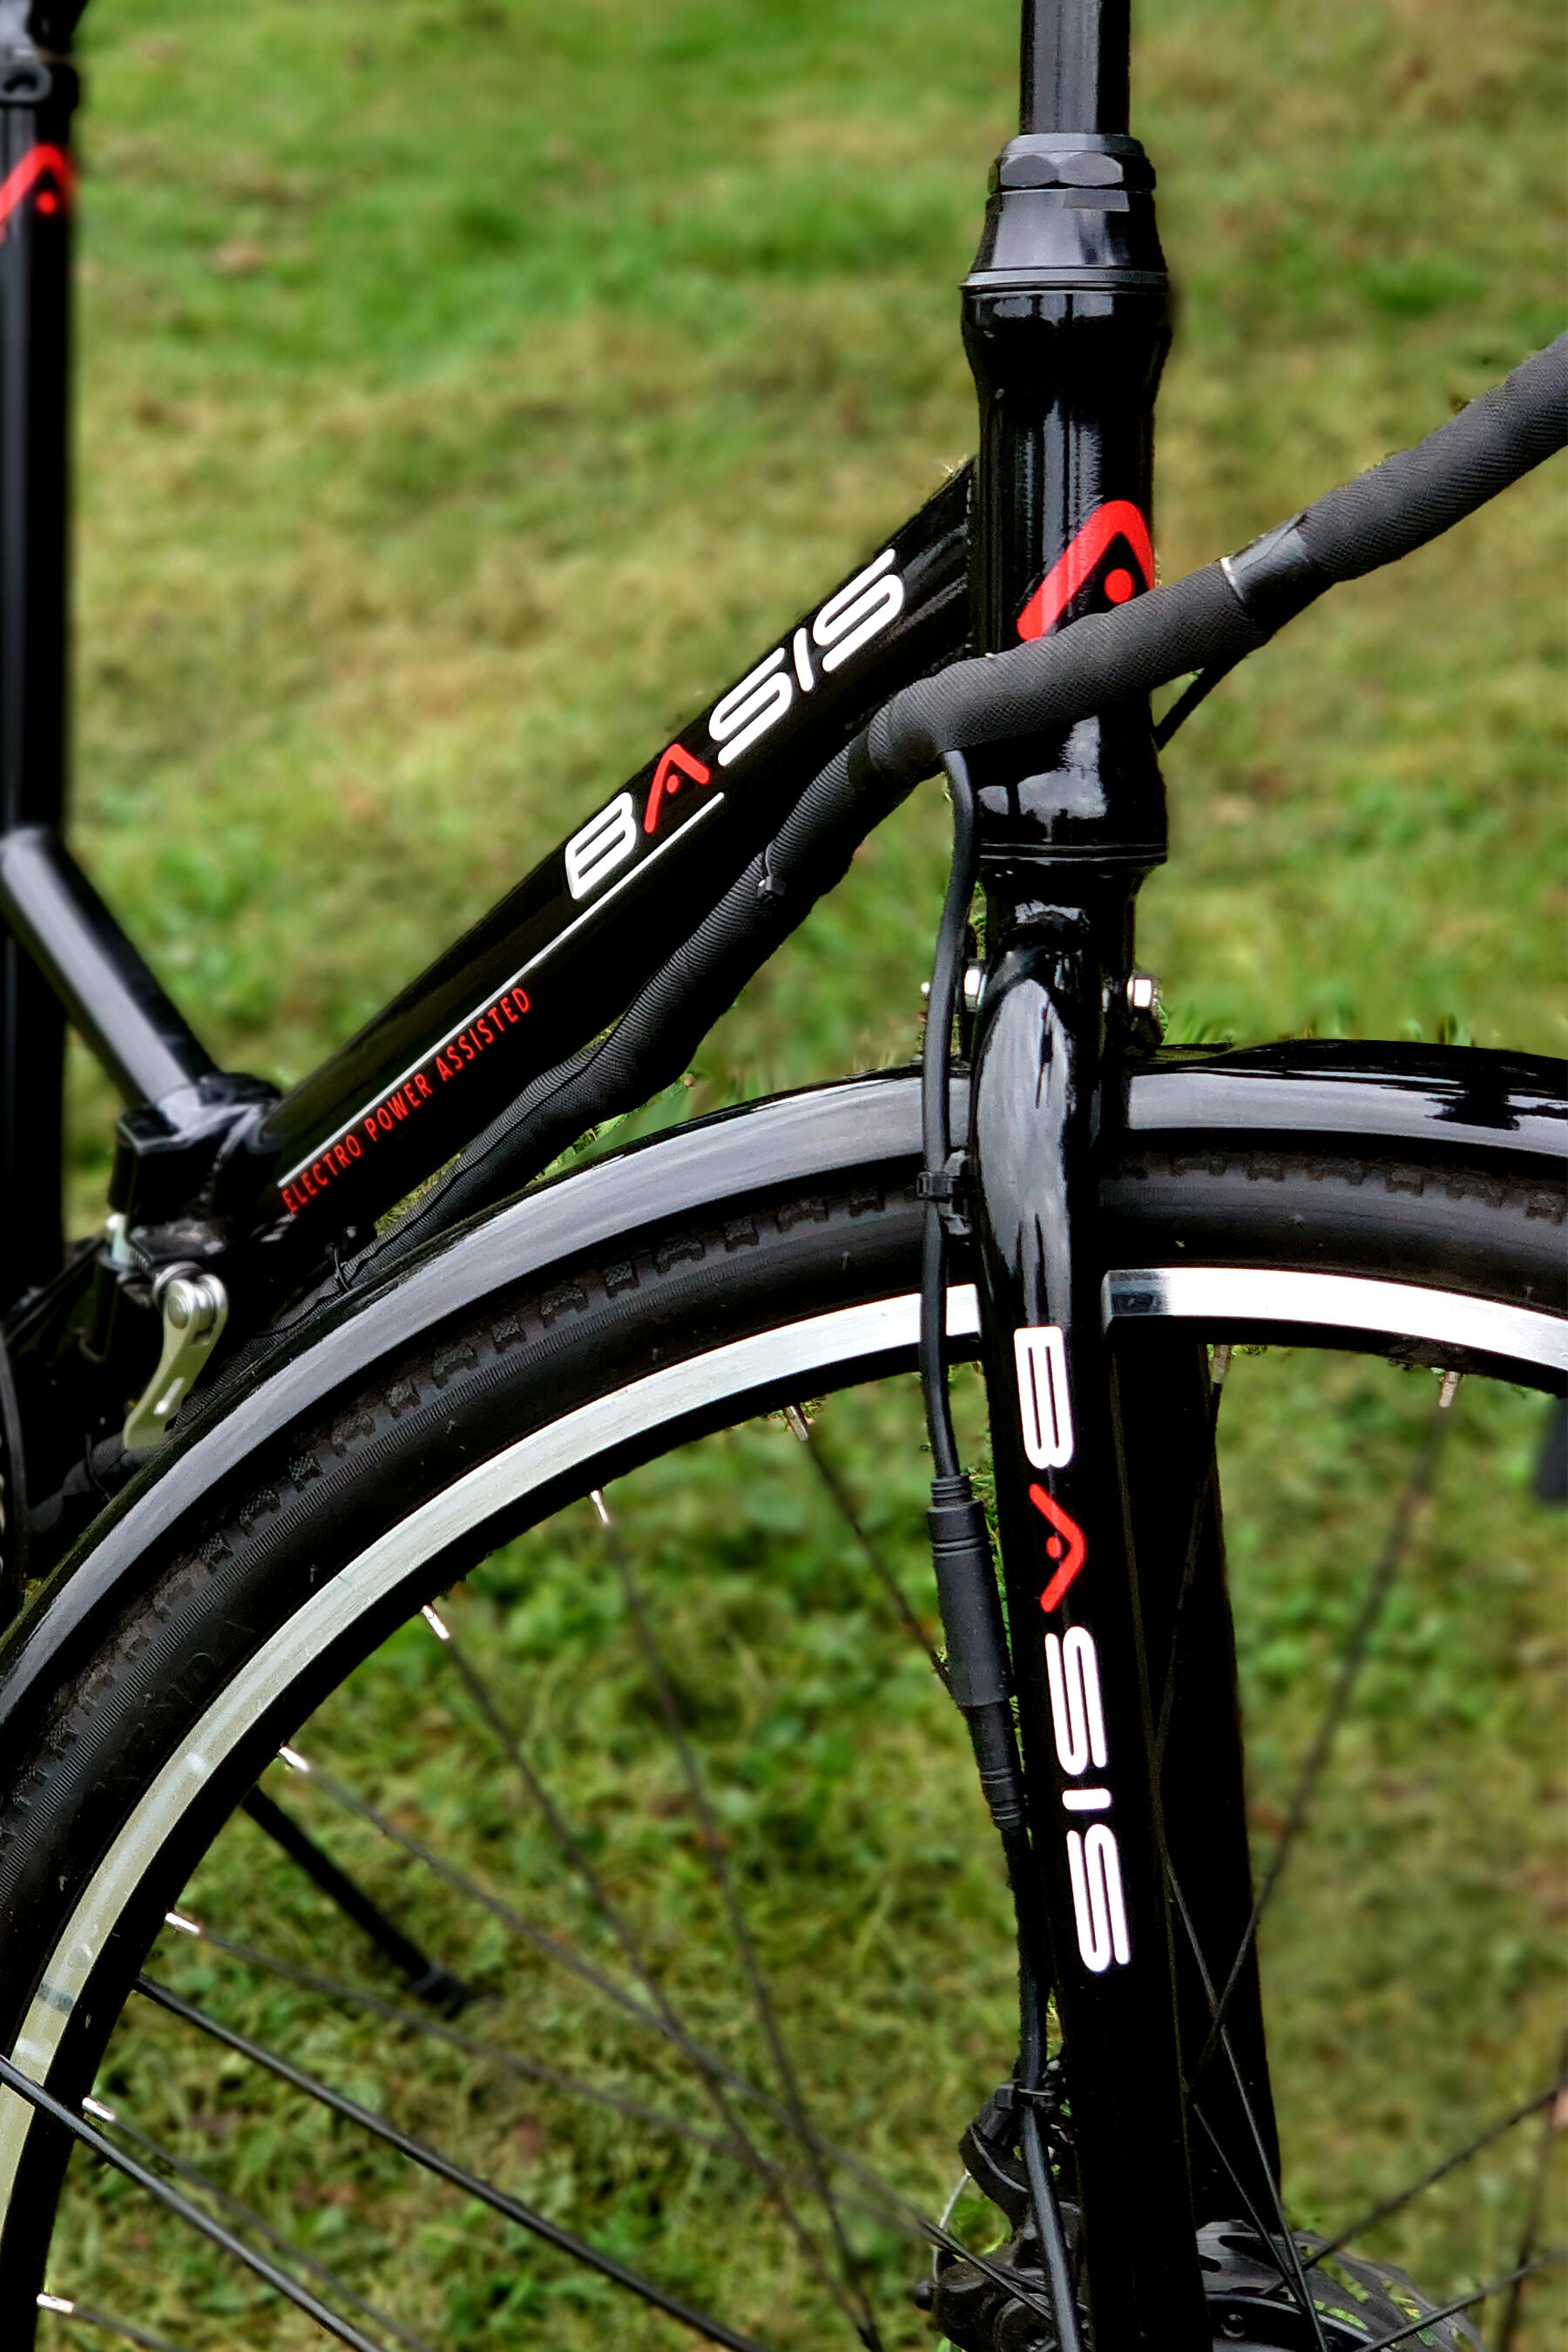 Basis Hybrid Full Size Folding Electric Bike 700c Wheel Black/Red 9.6Ah 4/5